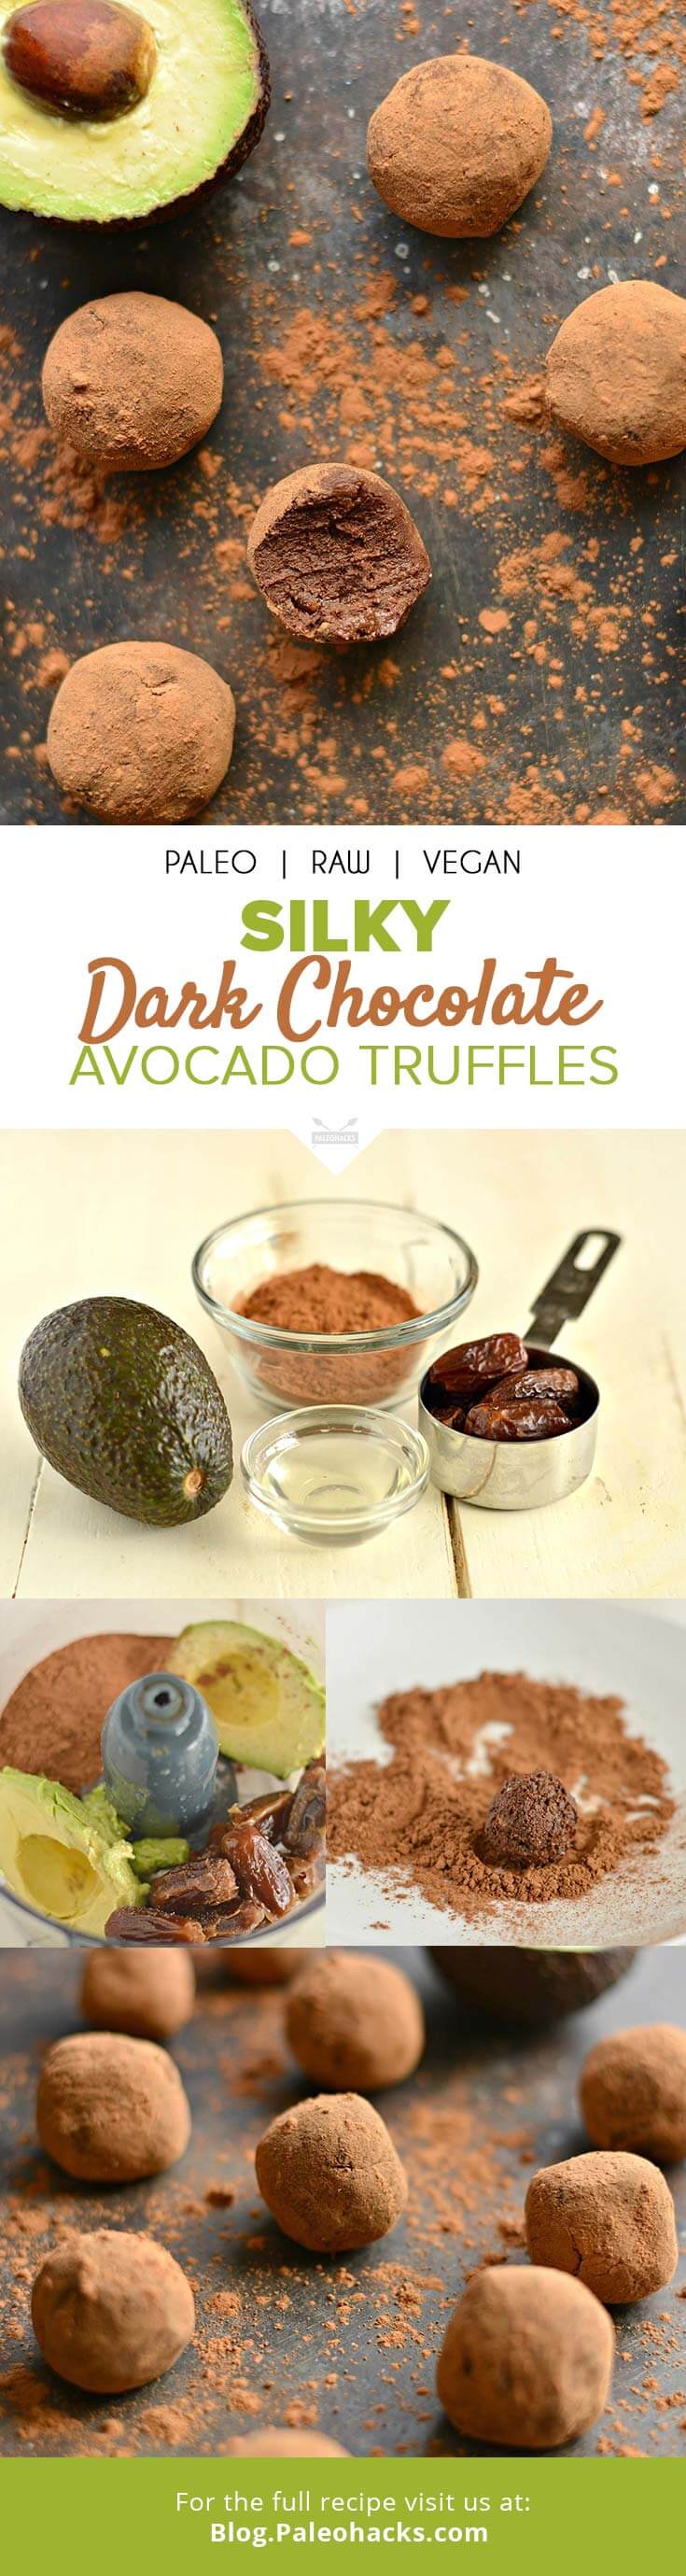 dark chocolate avocado truffles pin